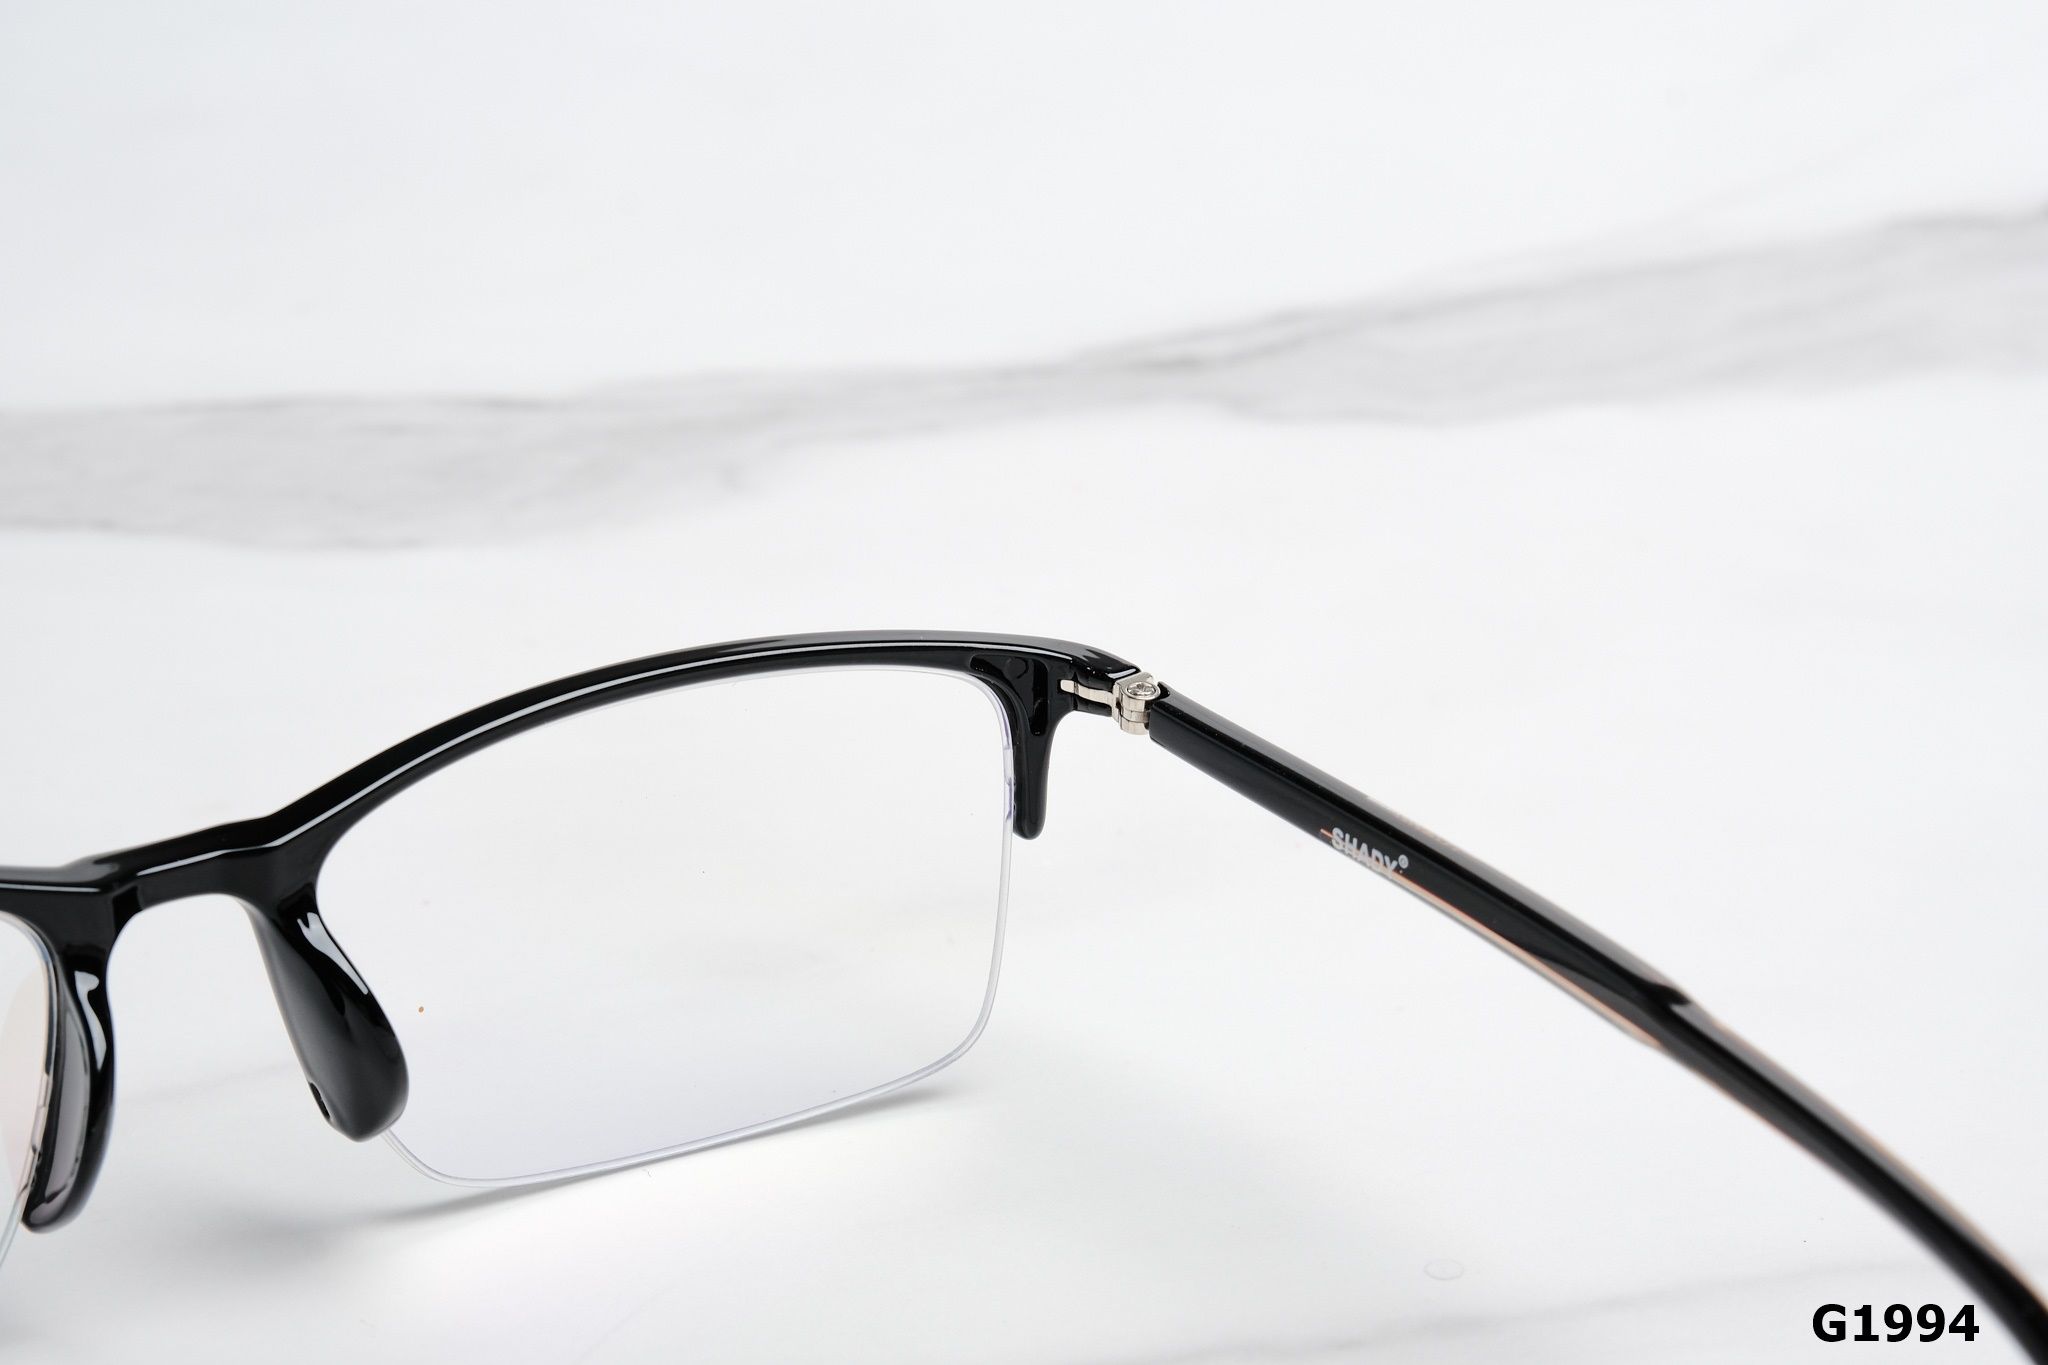  SHADY Eyewear - Glasses - G1994 